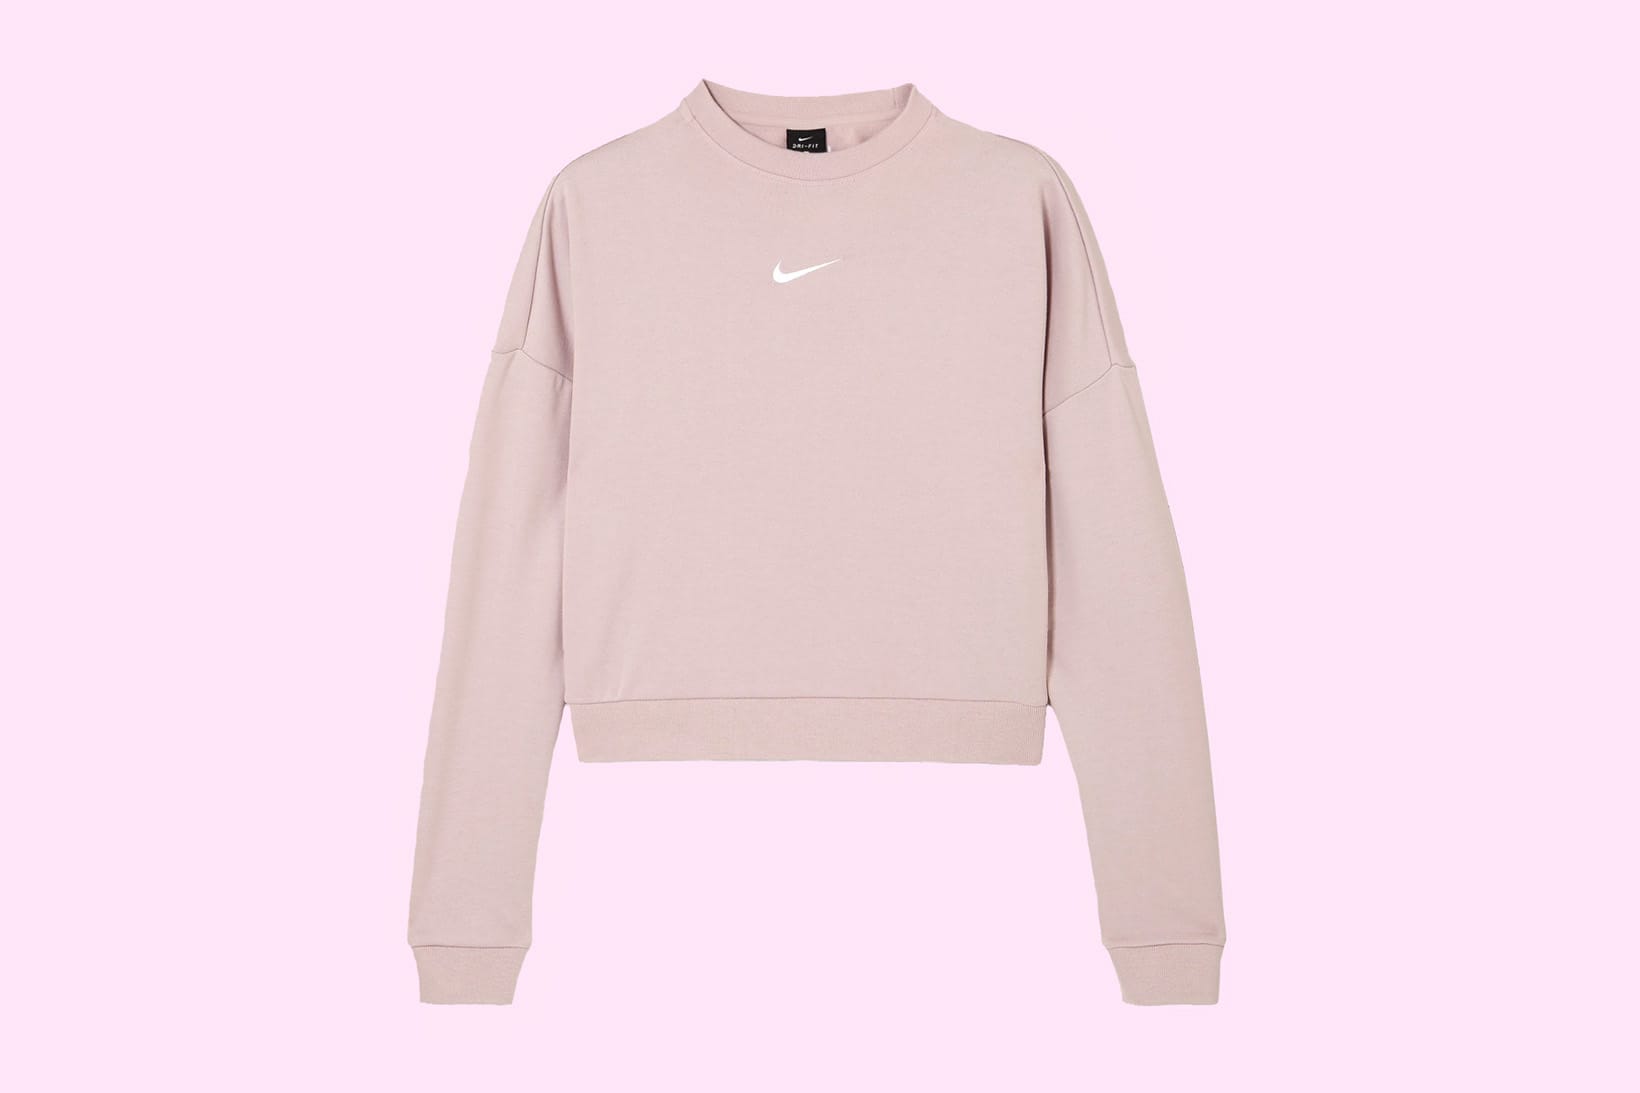 pink and white nike sweatshirt